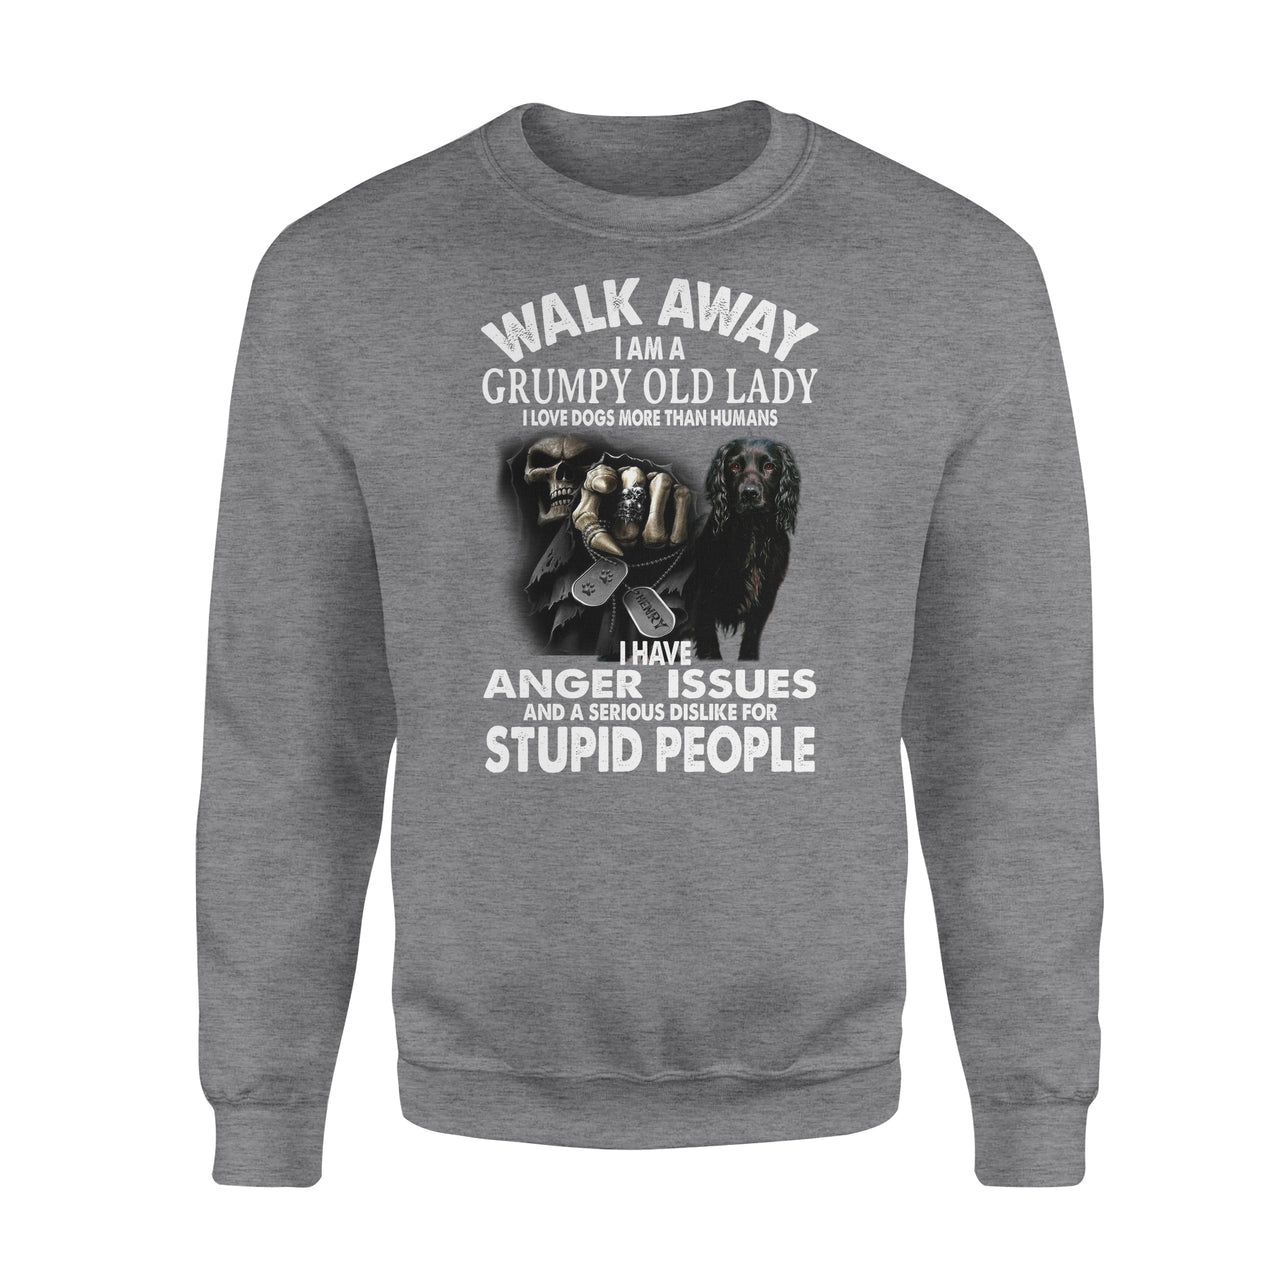 Personalized Dog Gift Idea - Walk Away, I Am A Grumpy Old Lady For Dog Mom - Standard Crew Neck Sweatshirt